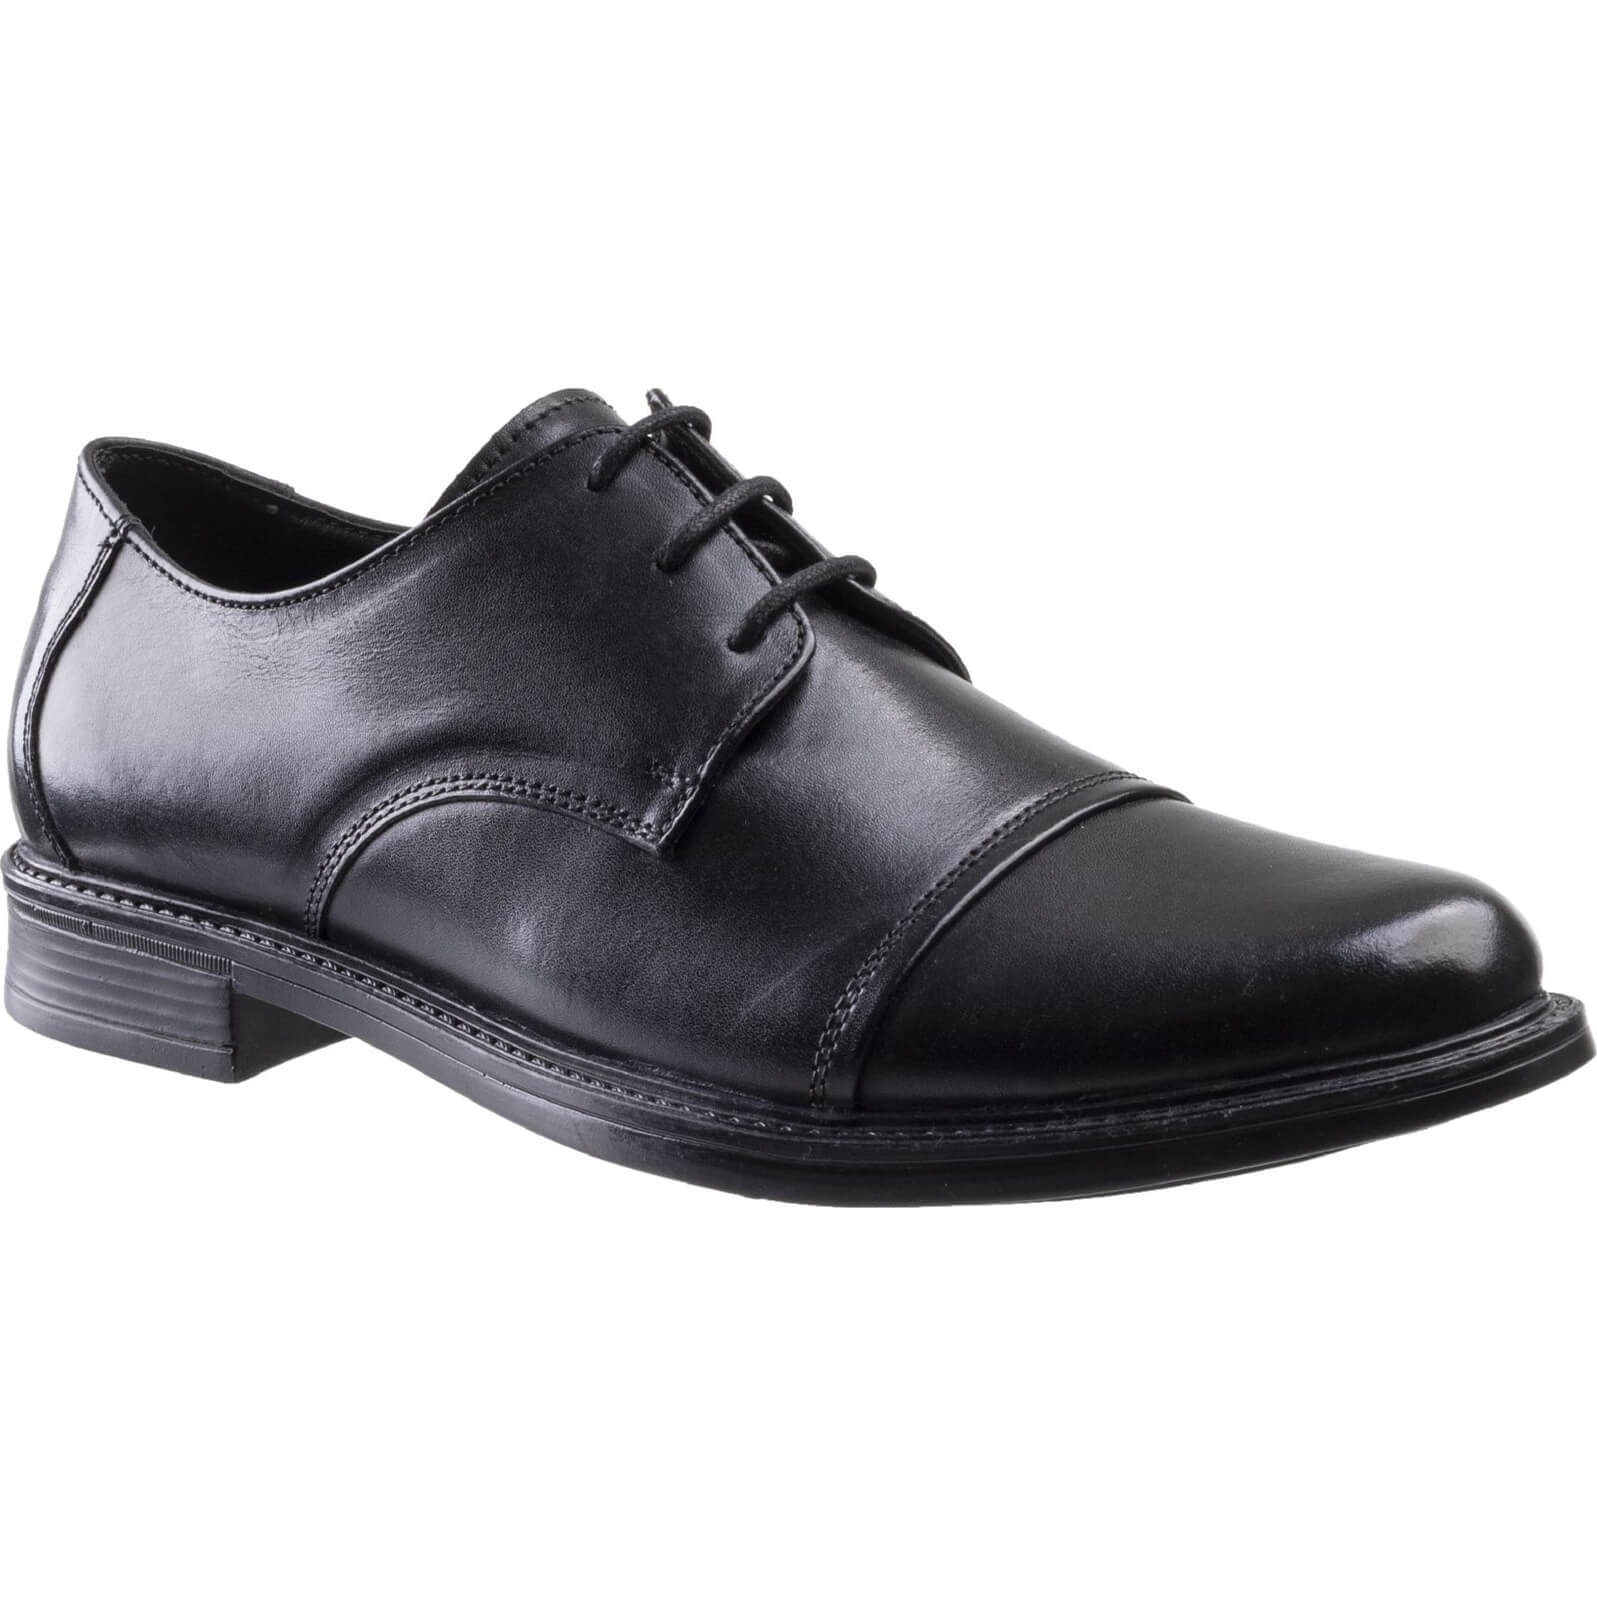 Image of Amblers Bristol Lace Up Shoe Black Size 6